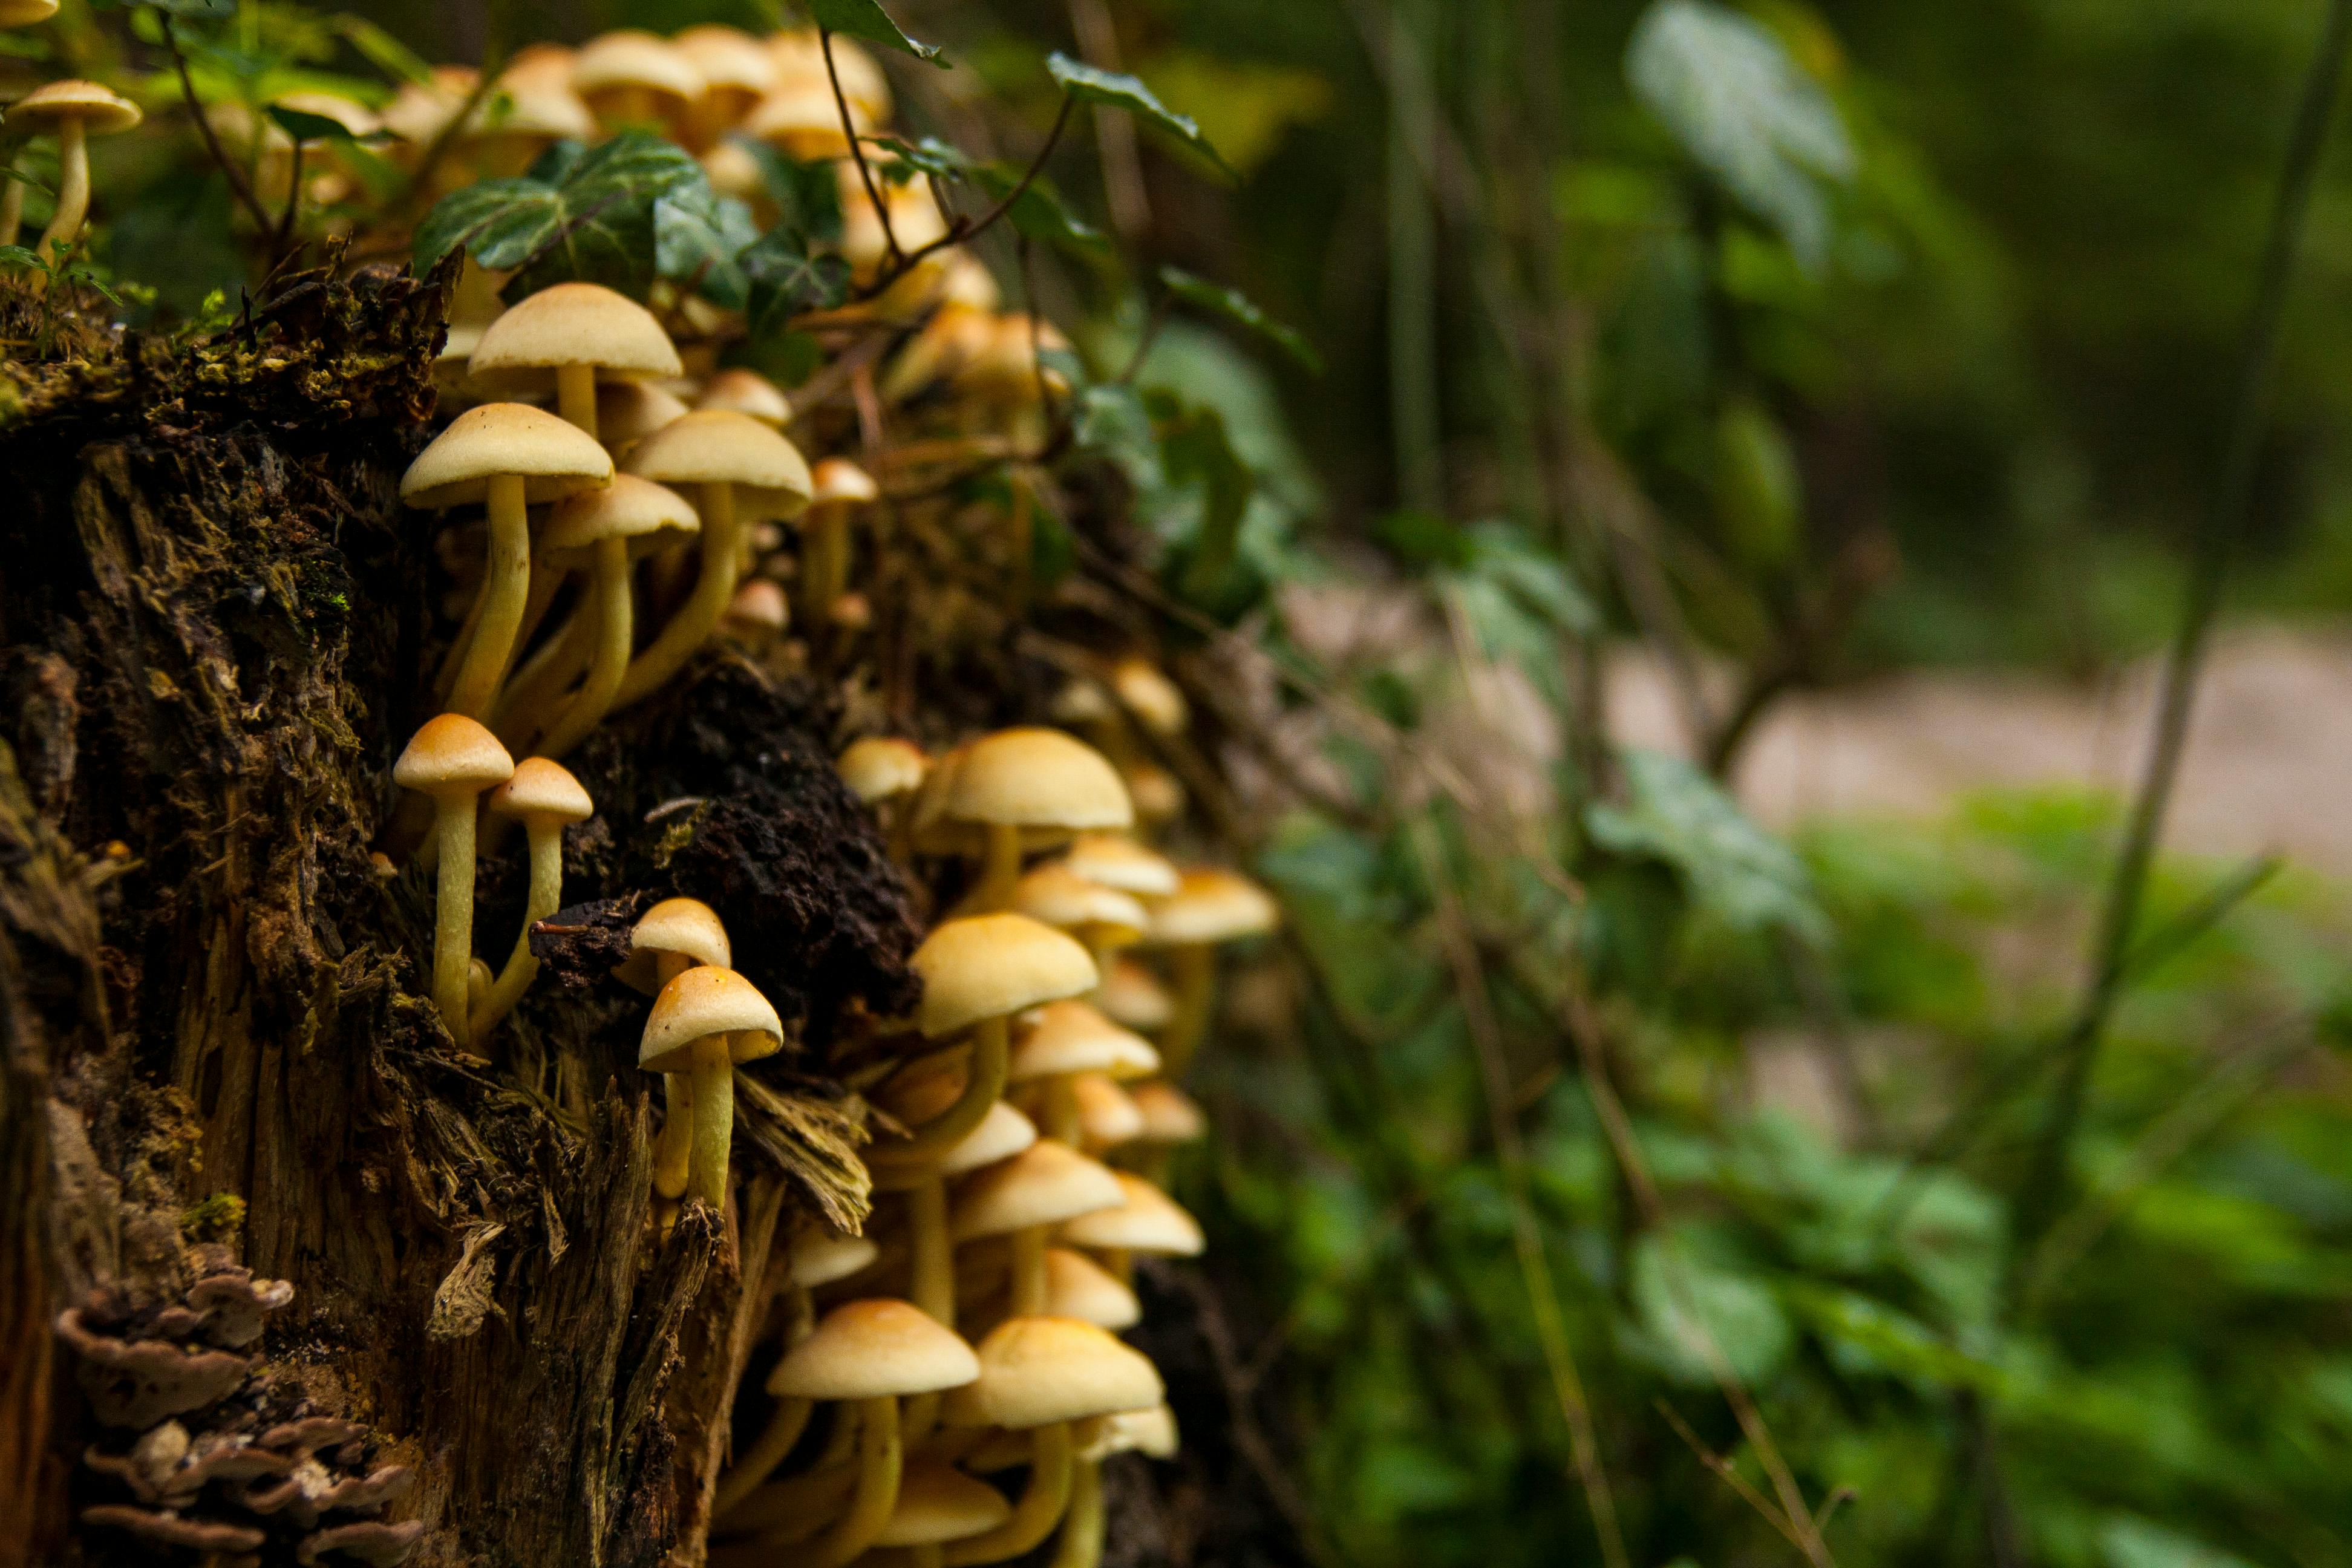 Yellow Cap Mushrooms Growing on a Dead Tree Trunk